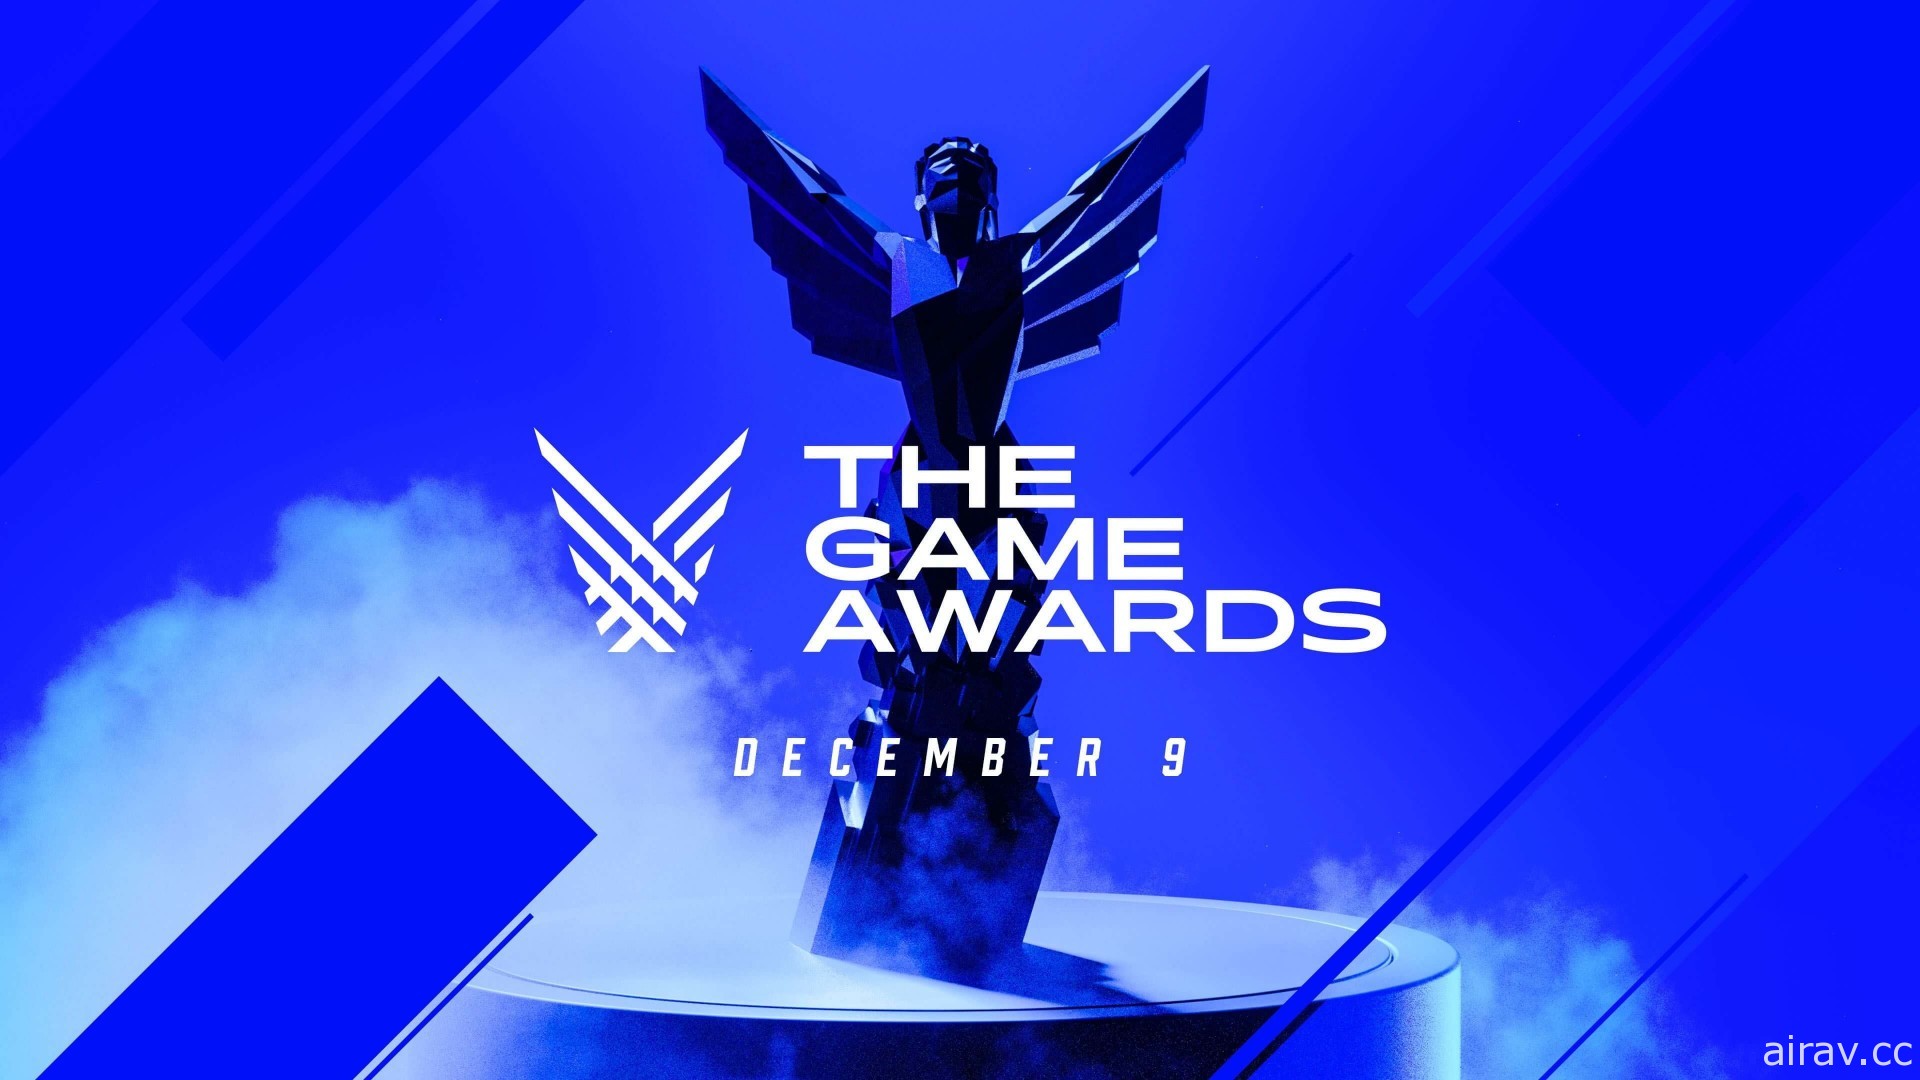 The Game Awards 主辦人喬夫‧基斯利預告今年將帶來有史以來最大規模的發表陣容